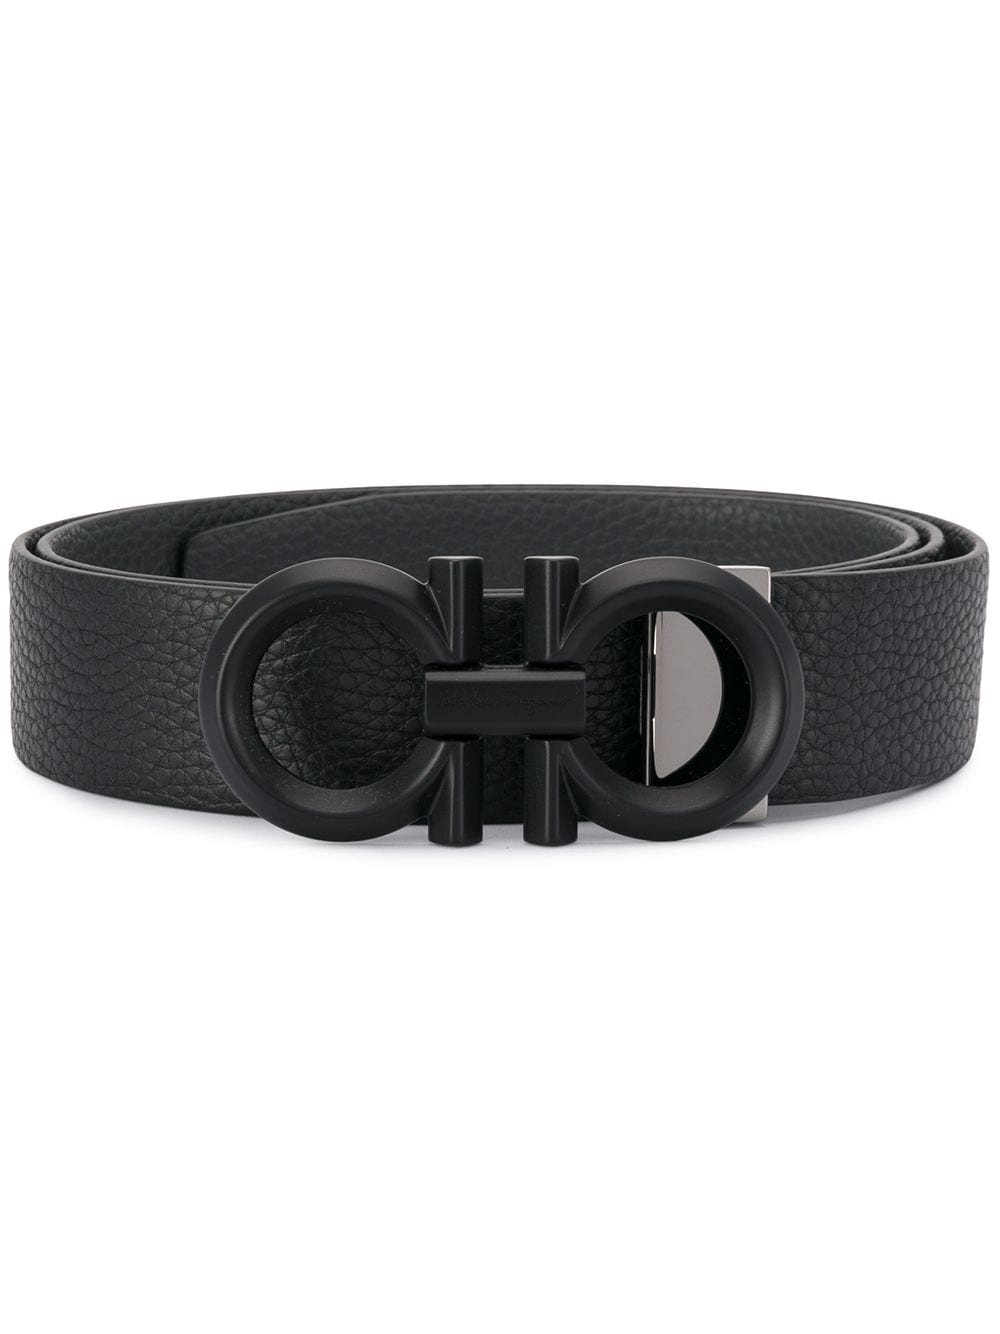 Ferragamo logo buckle belt - Black